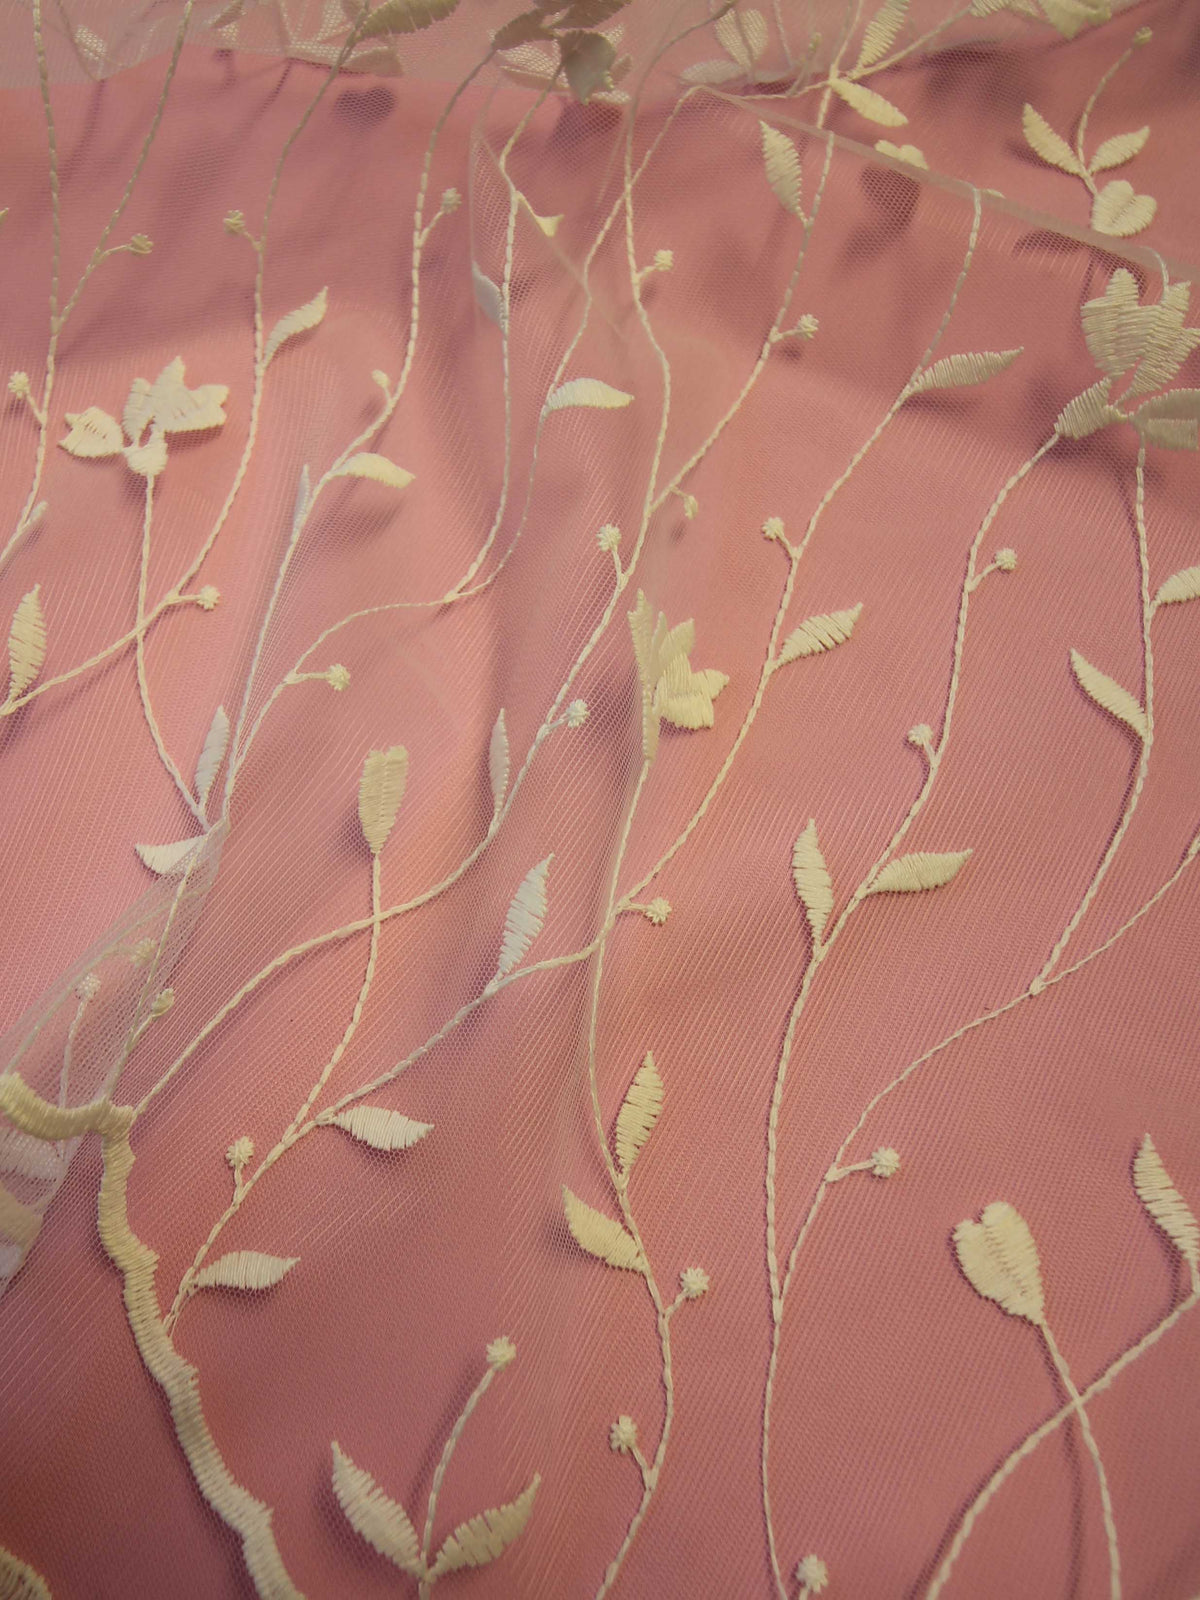 Silk Tulle Fabric: Fabrics from France, SKU 00055241 at $63 — Buy Luxury  Fabrics Online